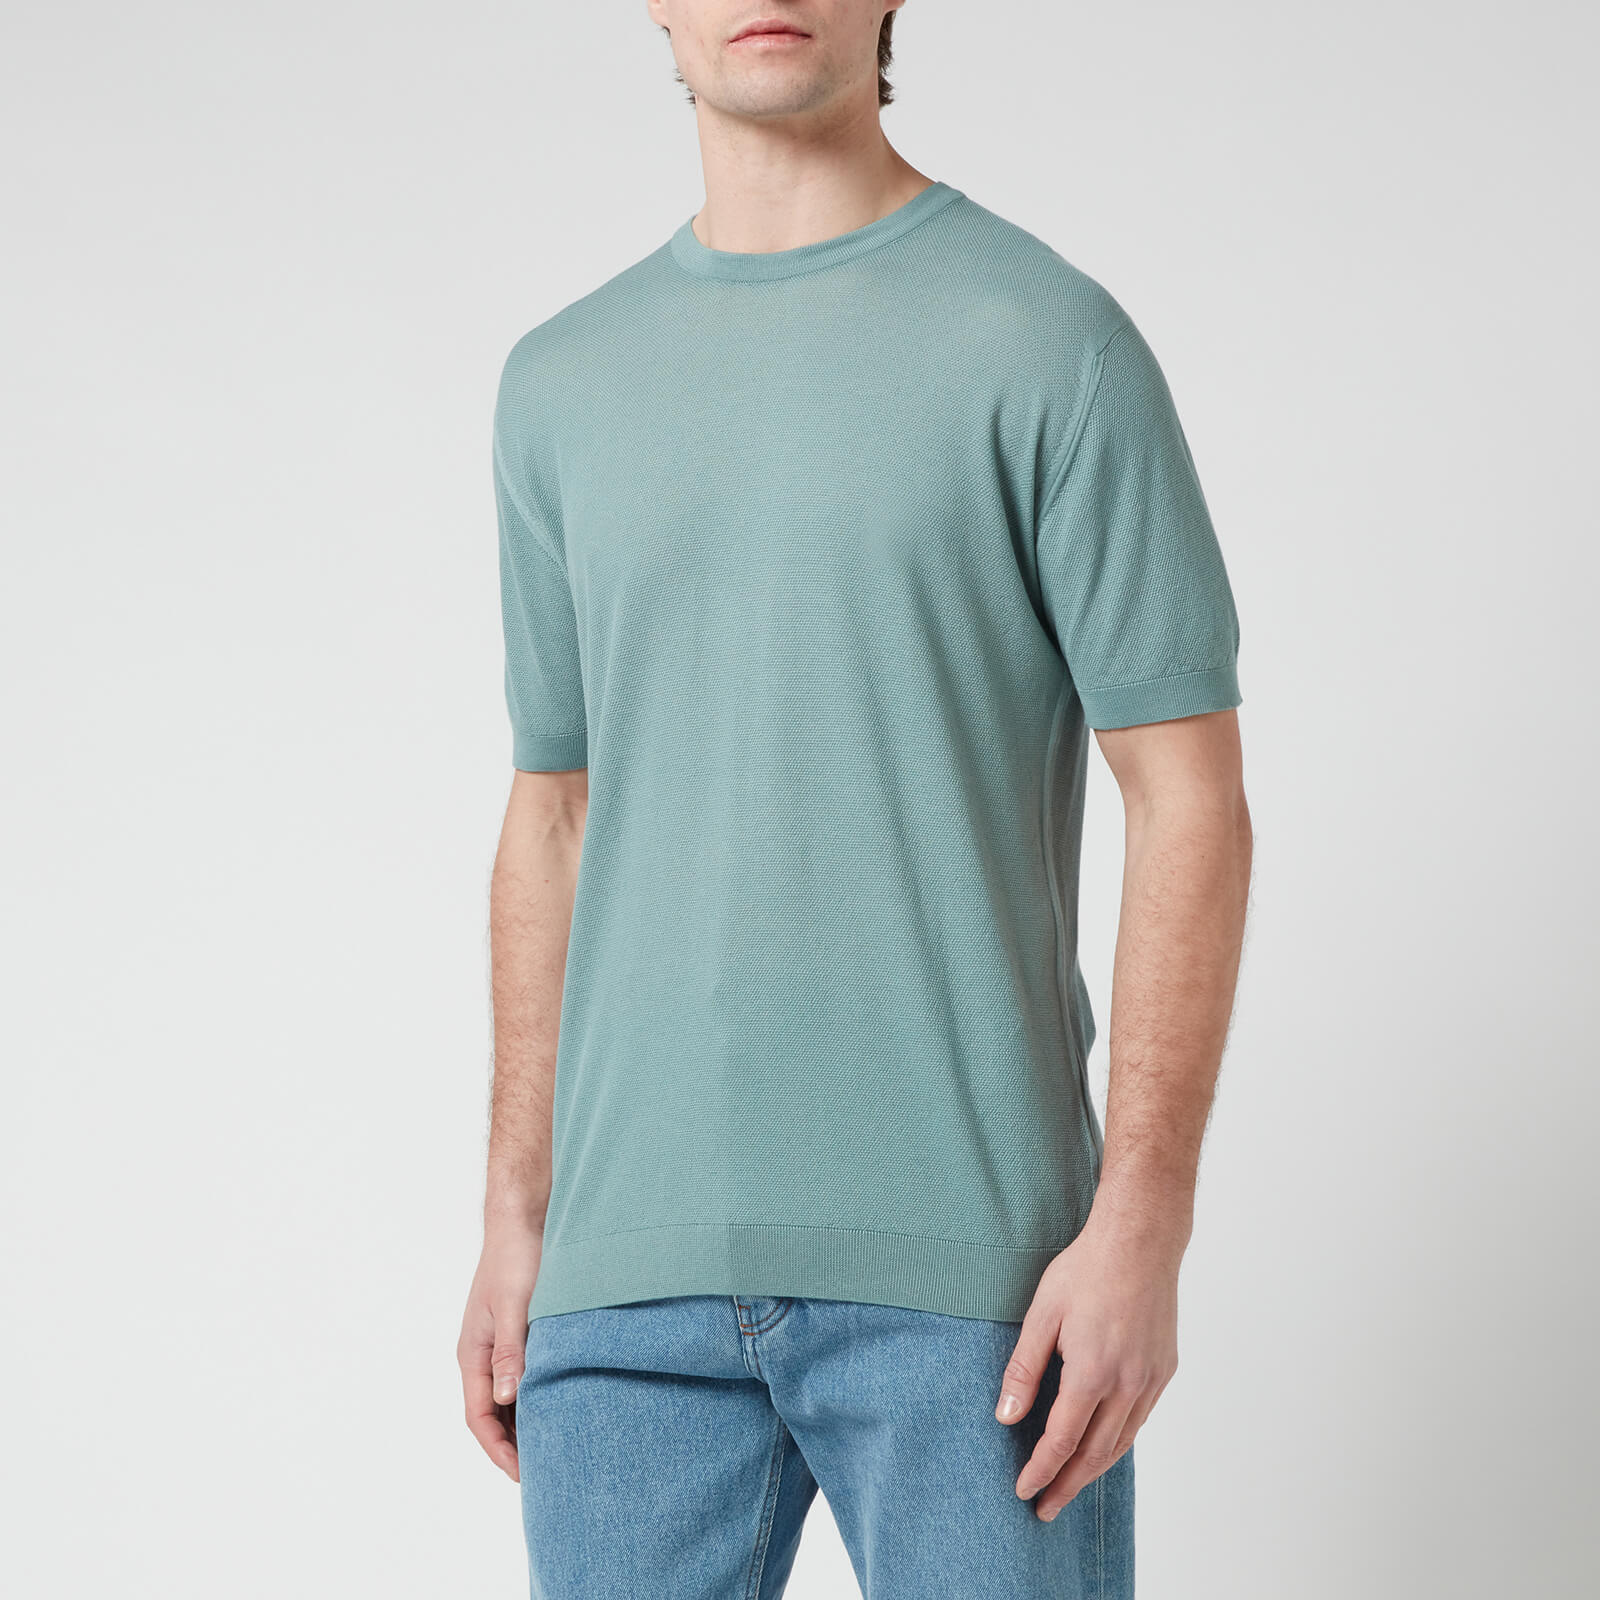 John Smedley Men's Park Pique T-Shirt - Haze Blue - S